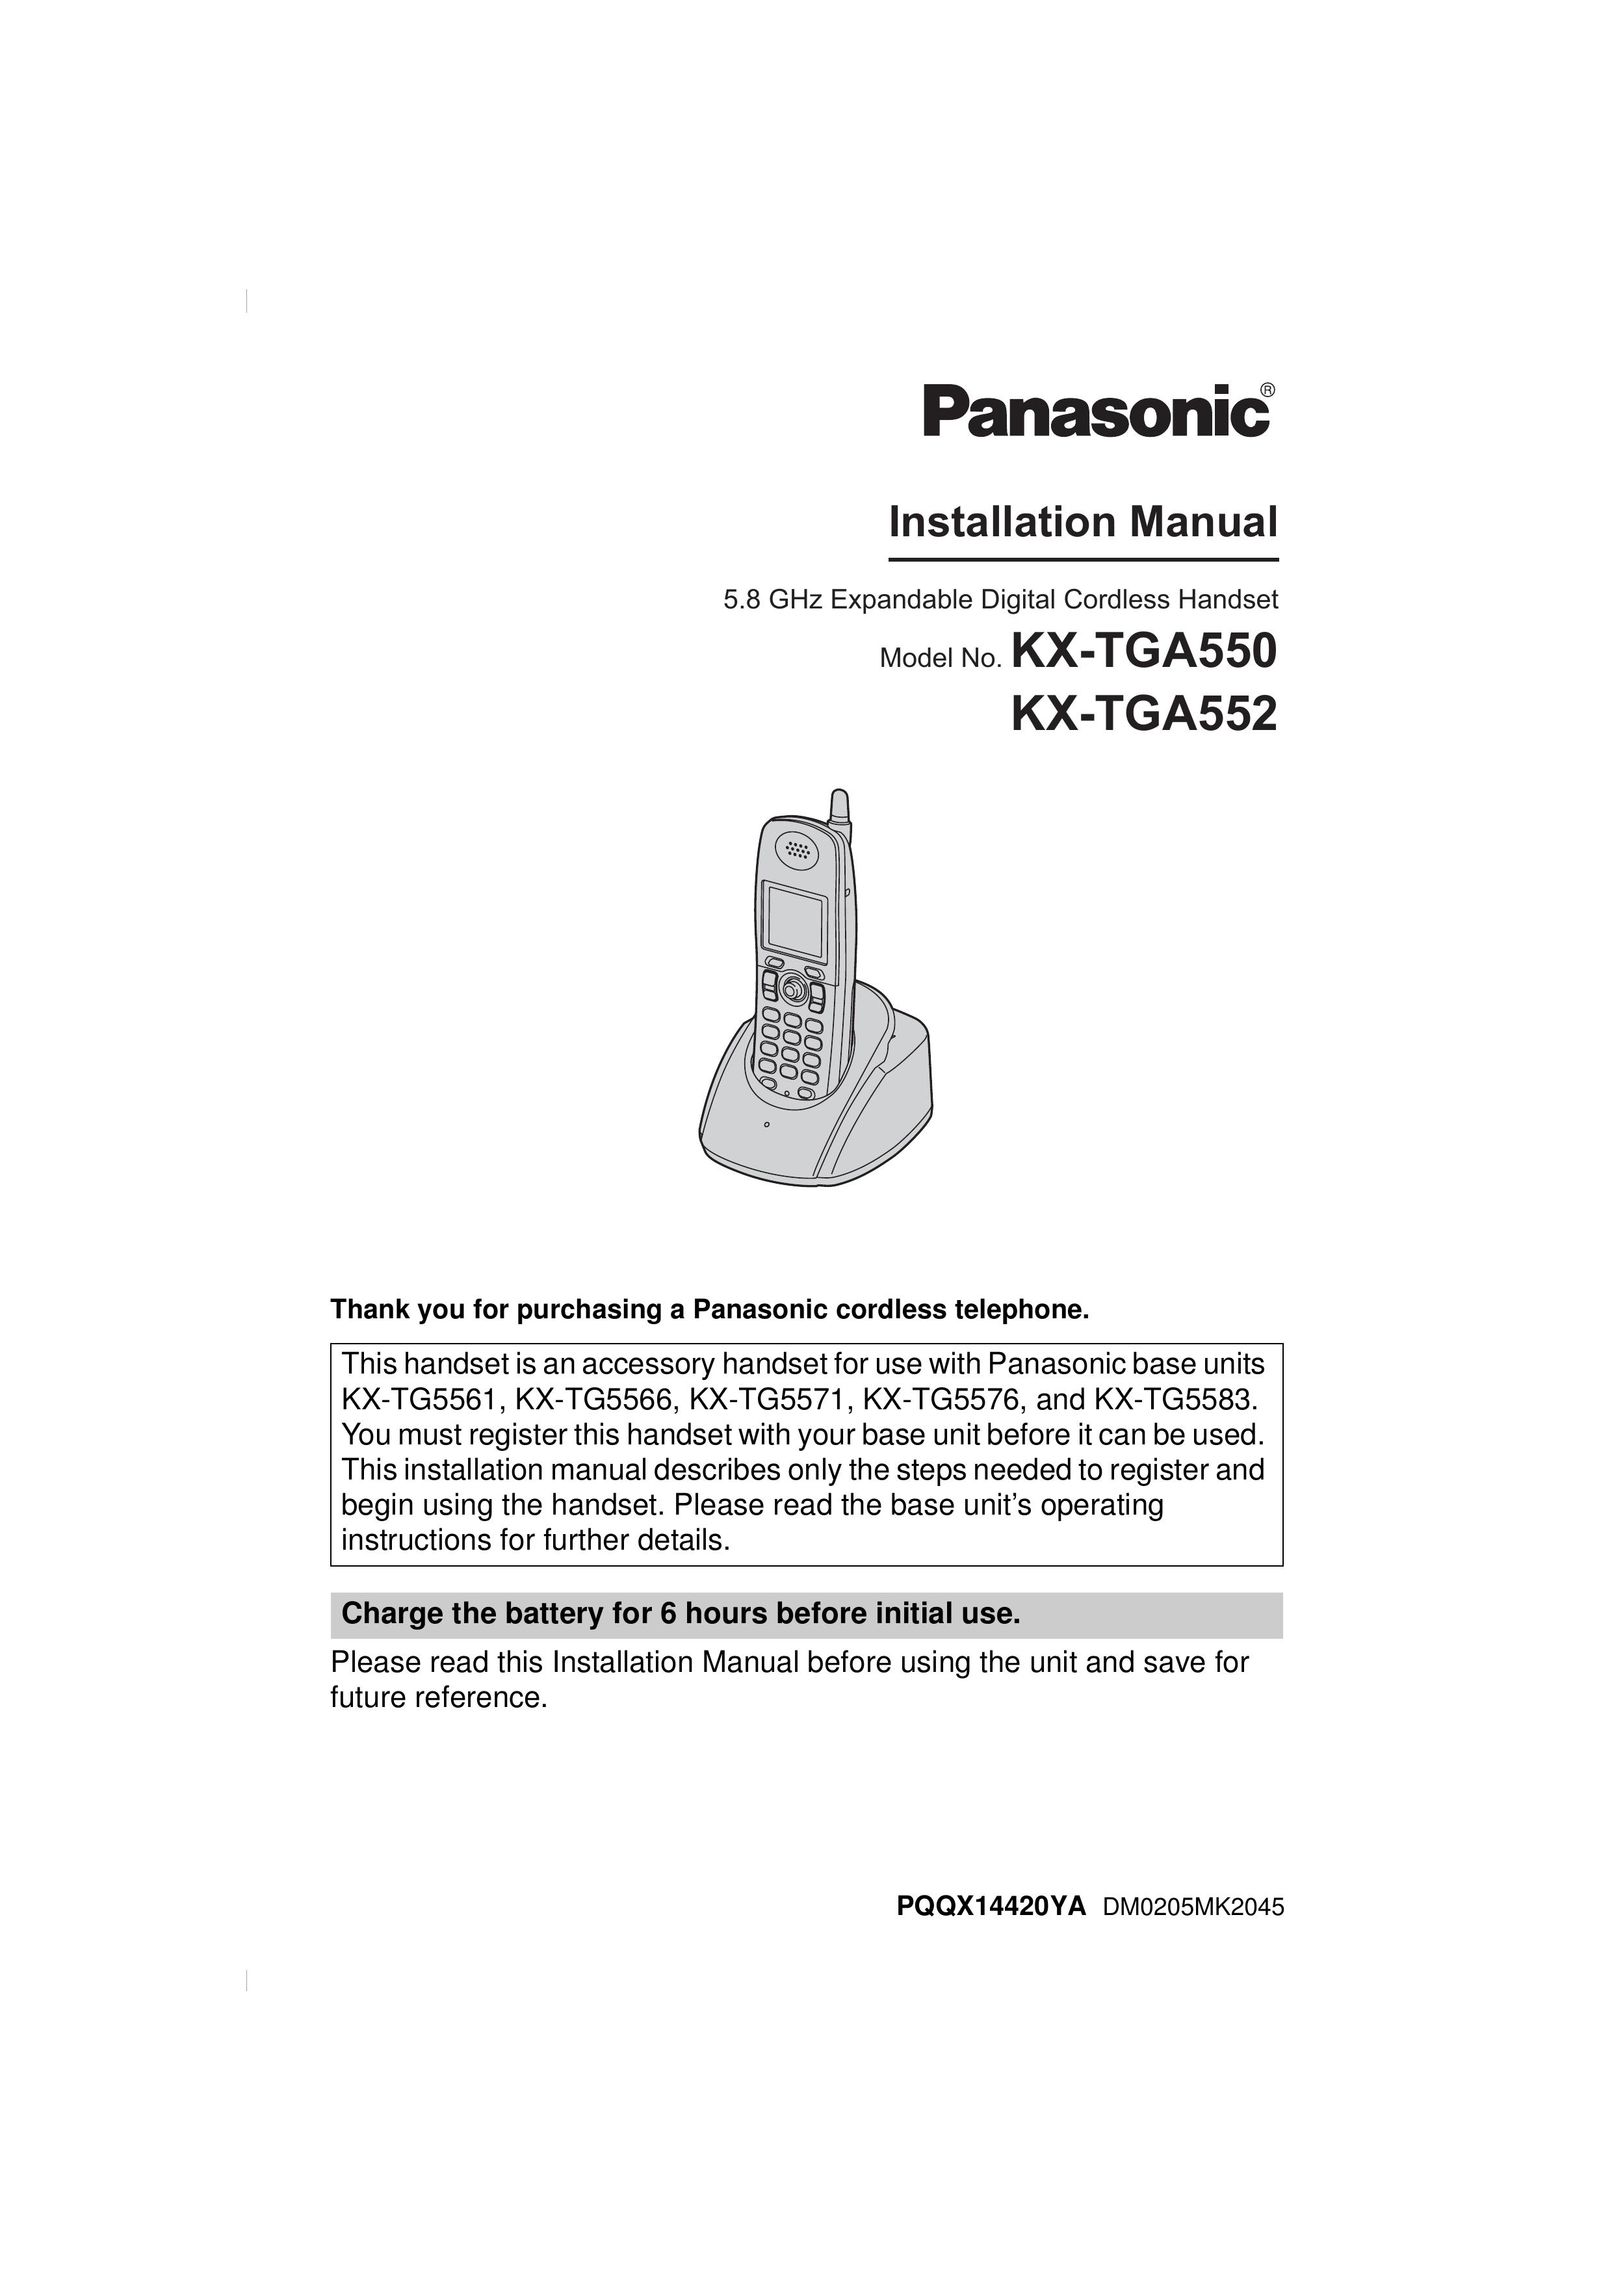 Linksys KX-TG5561 Cordless Telephone User Manual